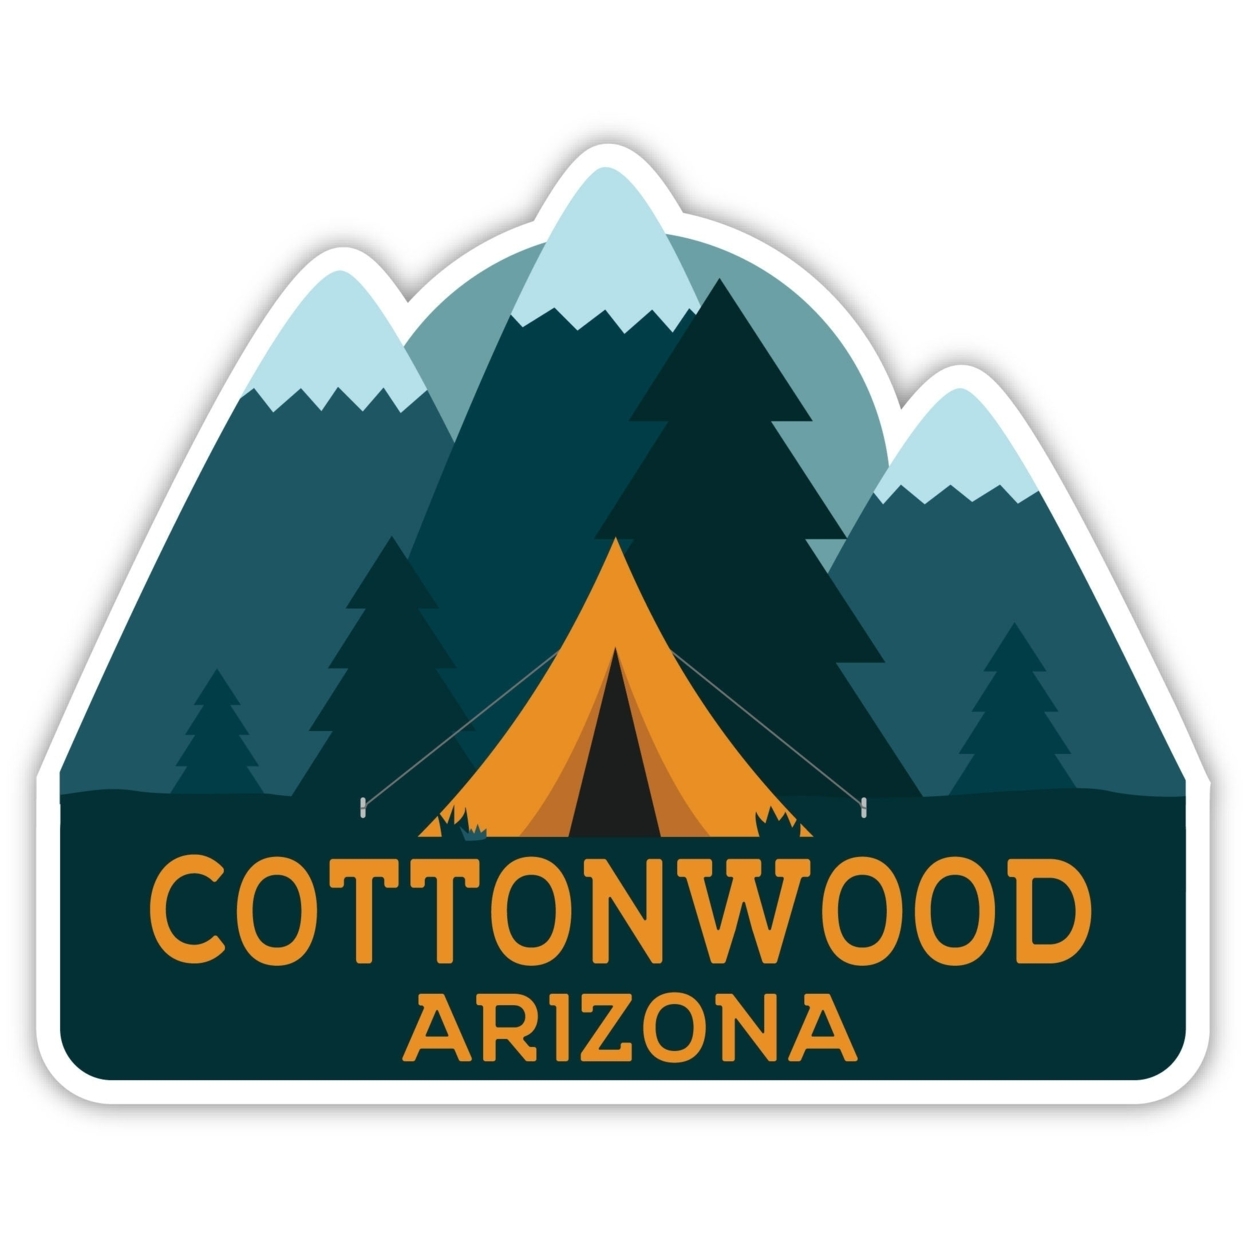 Cottonwood Arizona Souvenir Decorative Stickers (Choose Theme And Size) - 4-Pack, 4-Inch, Tent